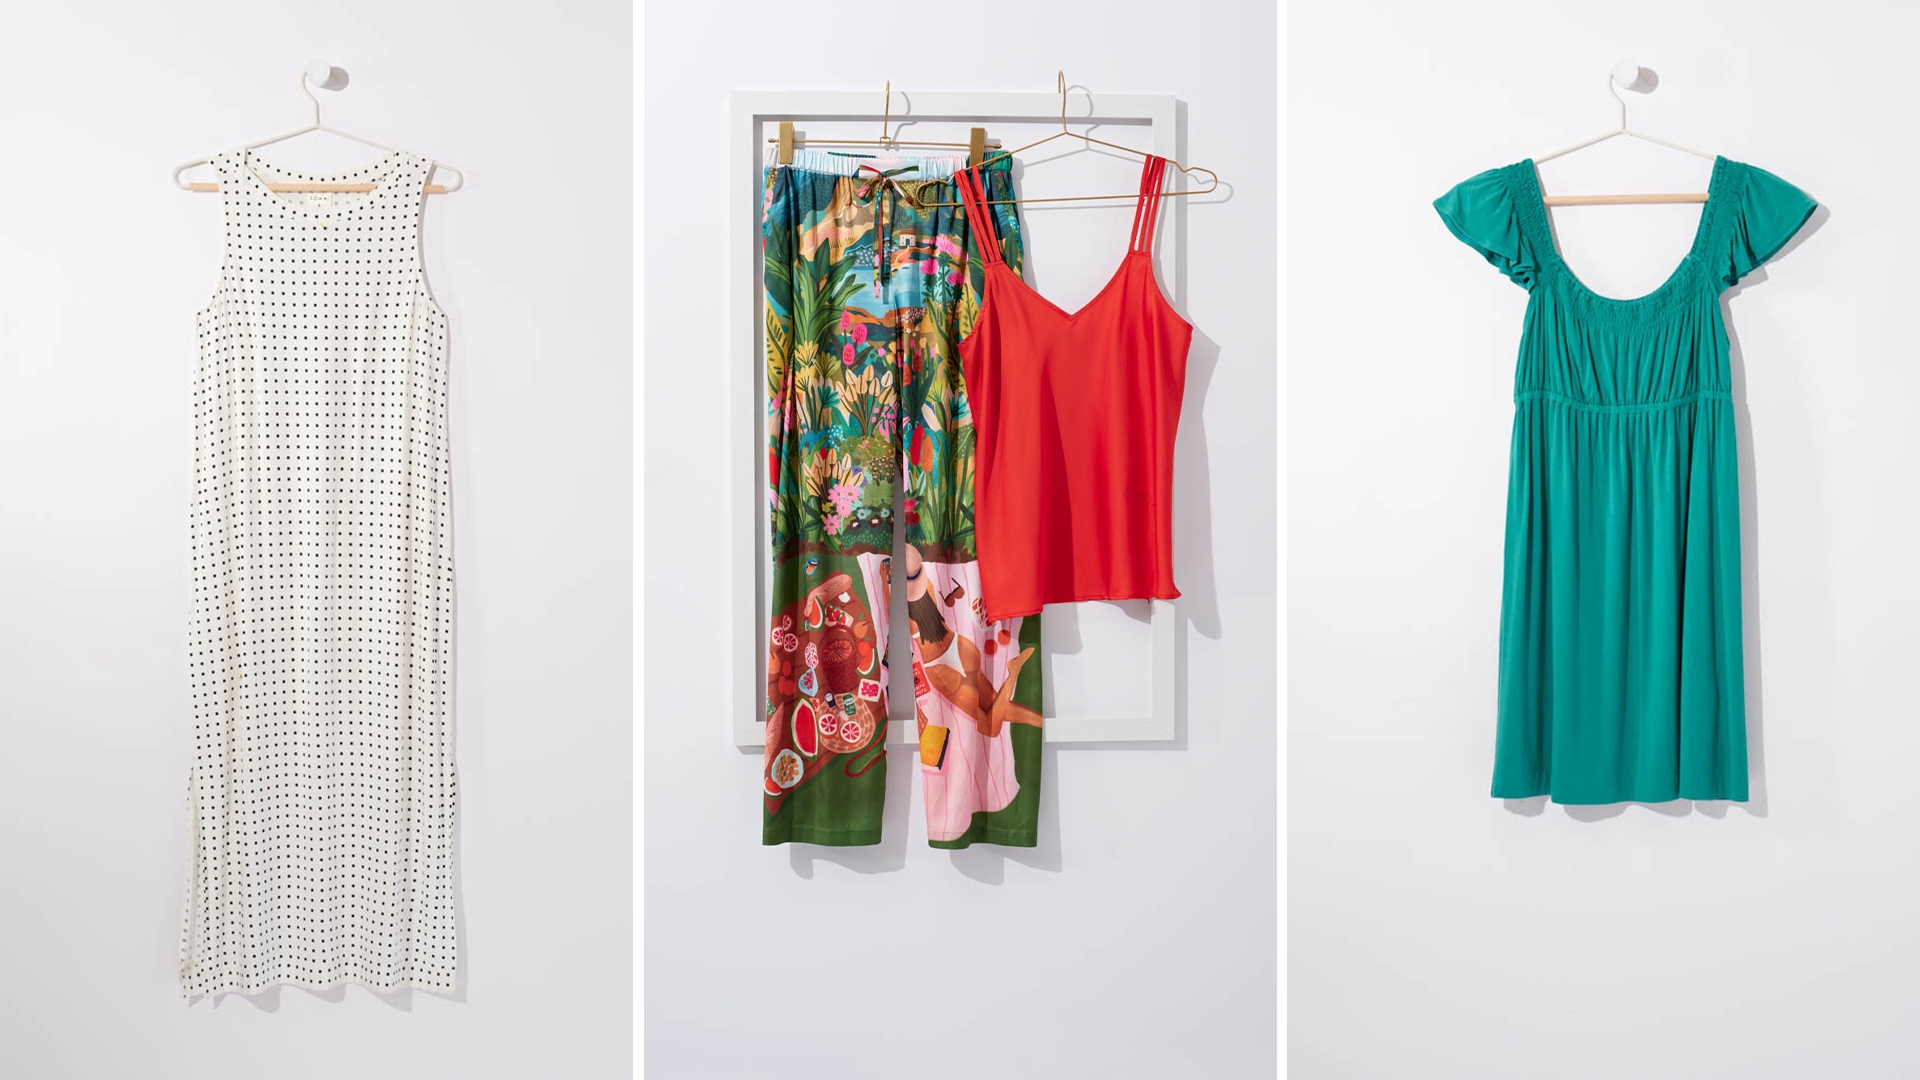 Soma women’s polka dot tank sleepshirt, patterned satin pajama pants, sleep tank, and teal nightgown hung on hangers.